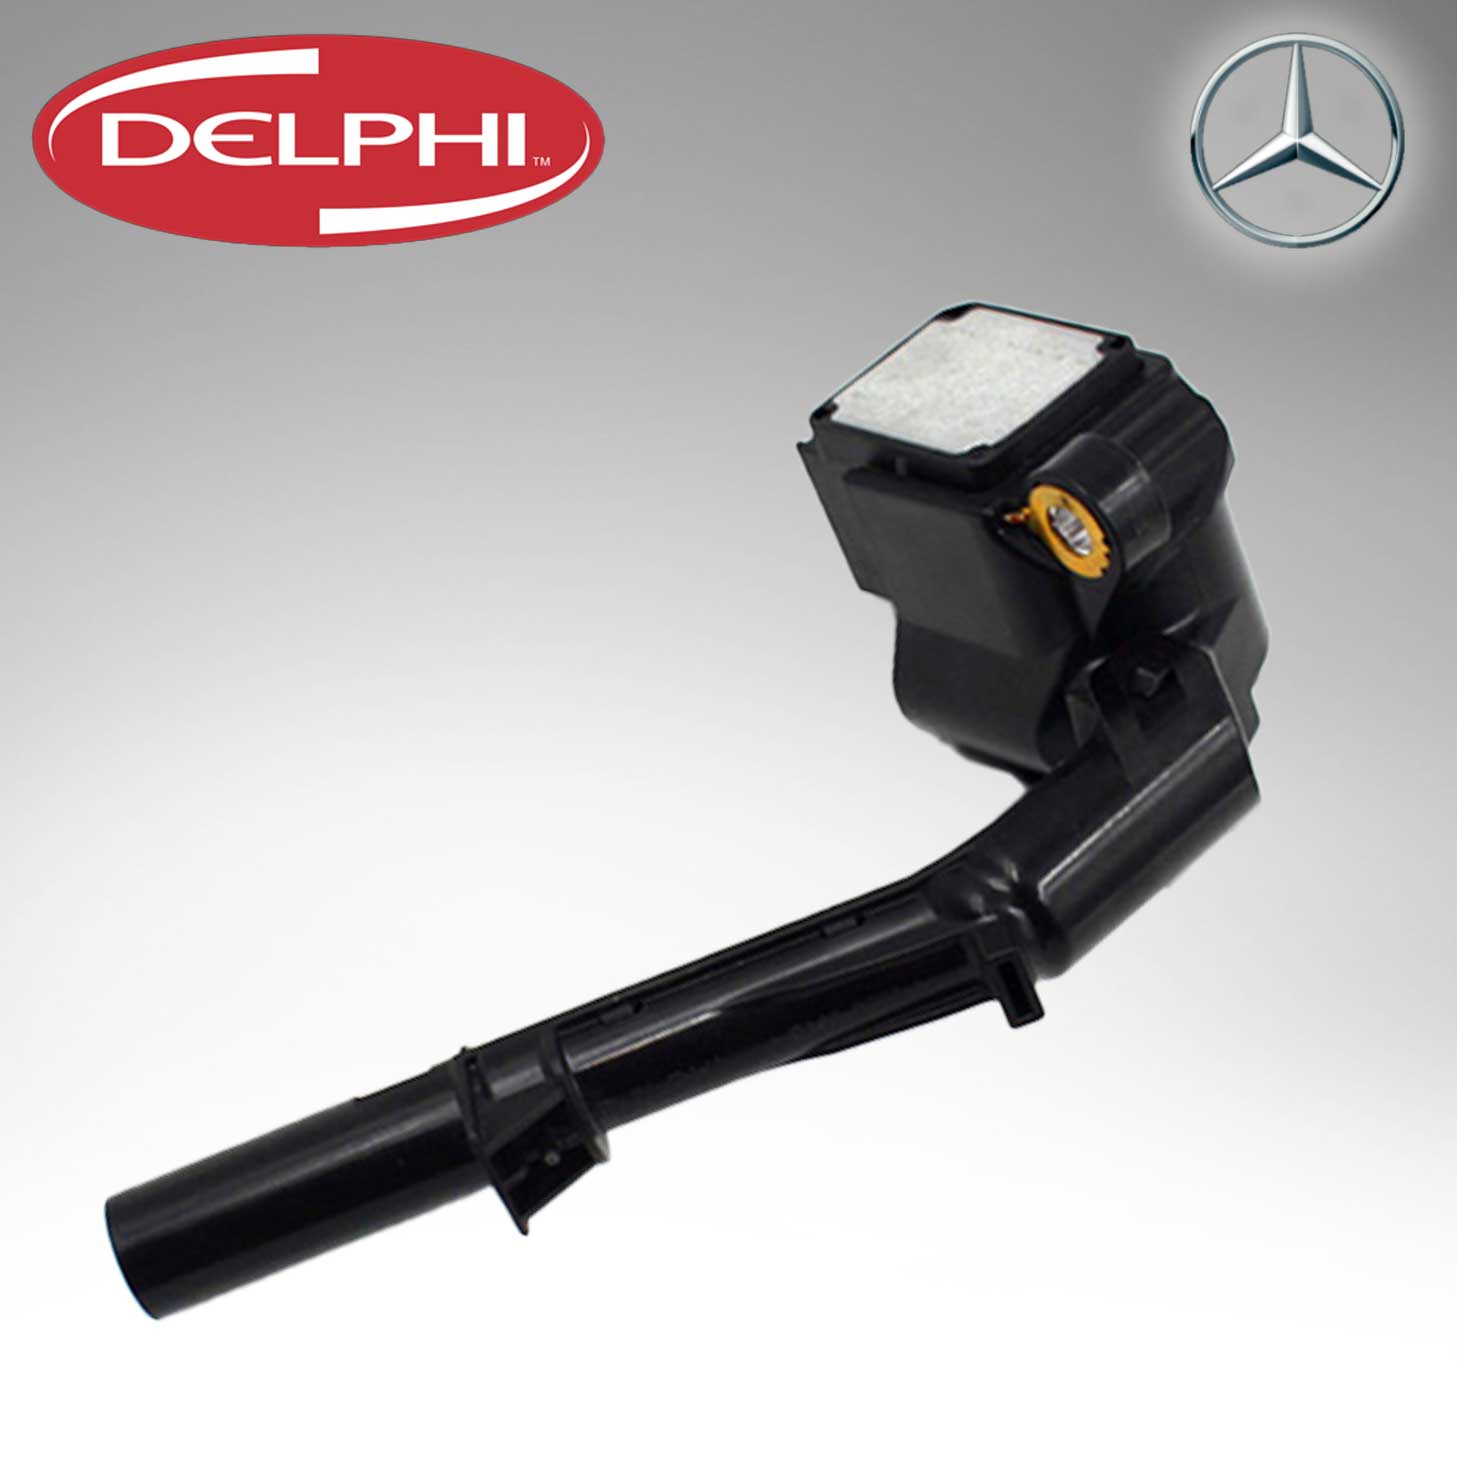 Delphi IGNITION COIL C300 CLA250 GN10690 12B1 2749060600 FOR Mercedes Benz 2749061400